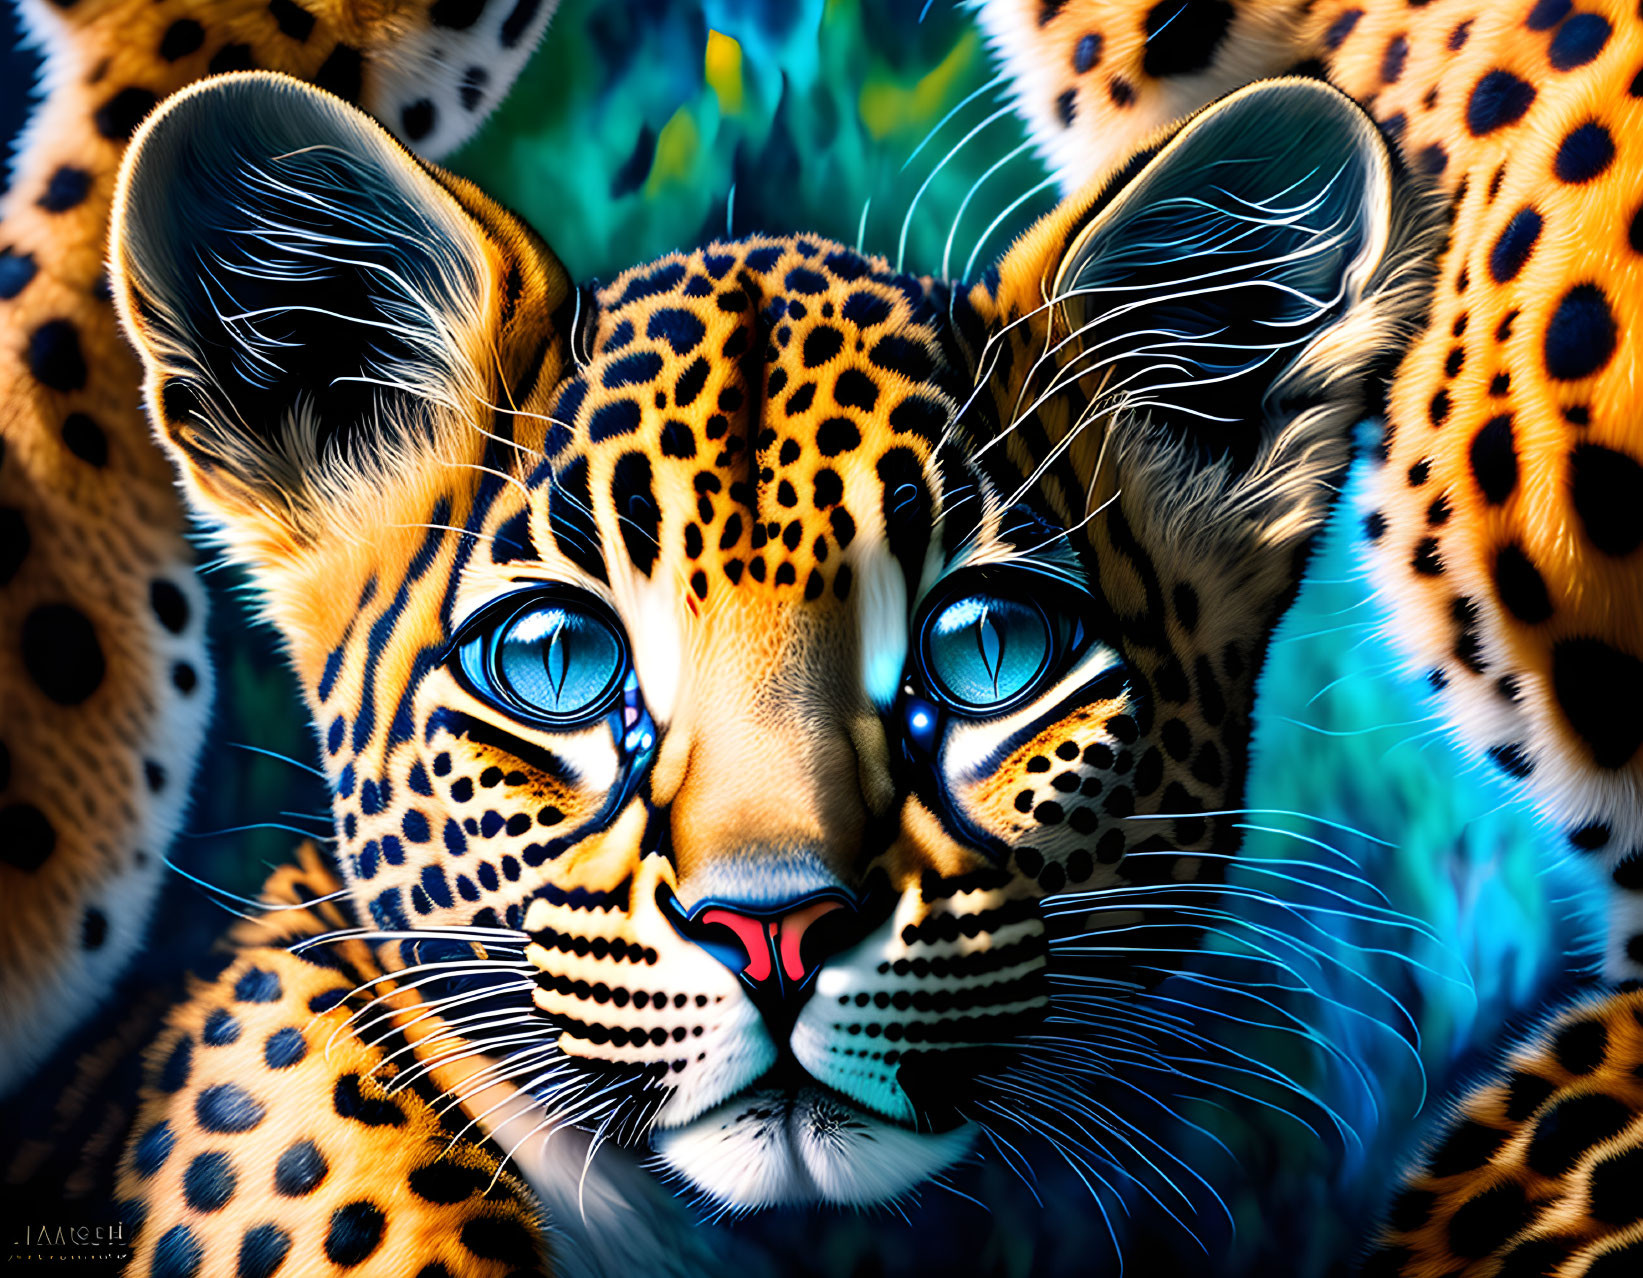 Digitally Enhanced Jaguar Image with Vivid Blue Eyes and Rosette Patterns